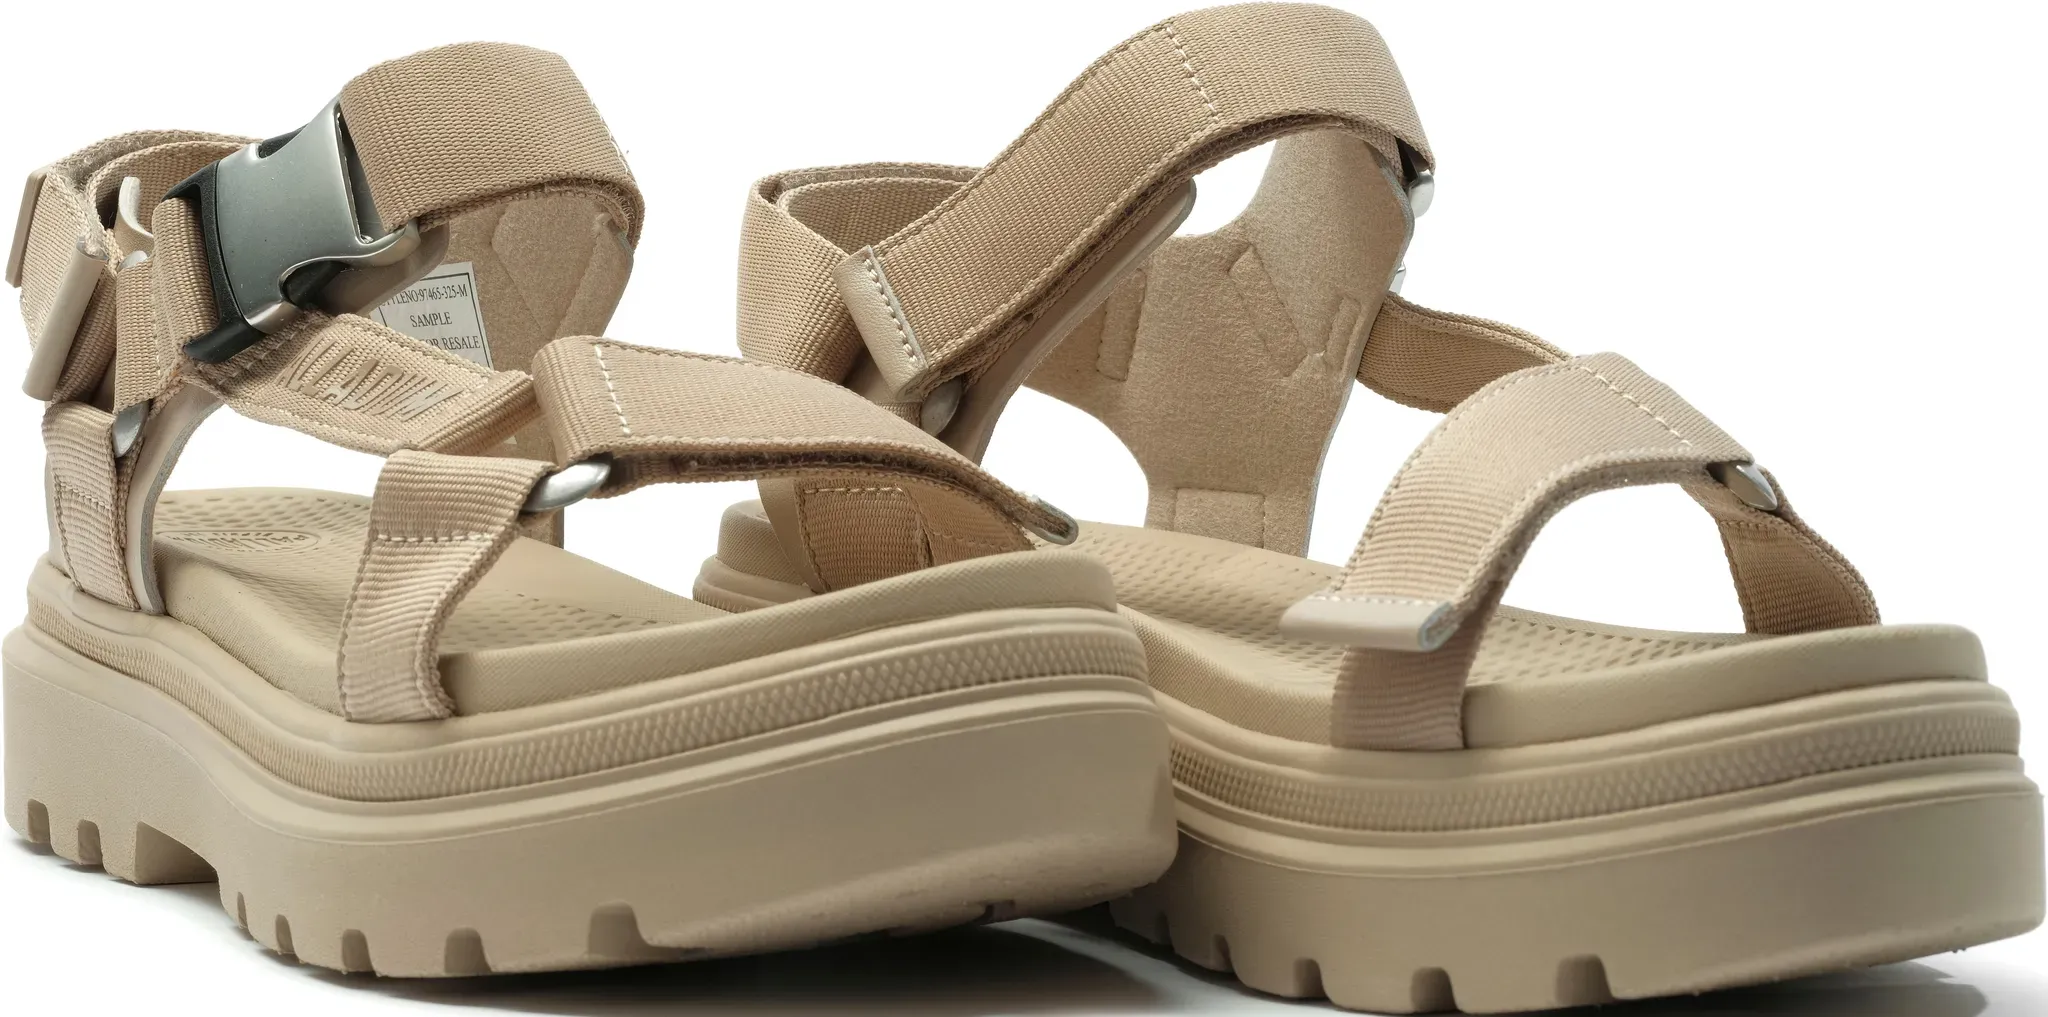 Sandale PALLADIUM "PALLACRUISE STRAP" Gr. 40, beige Schuhe Sandalen